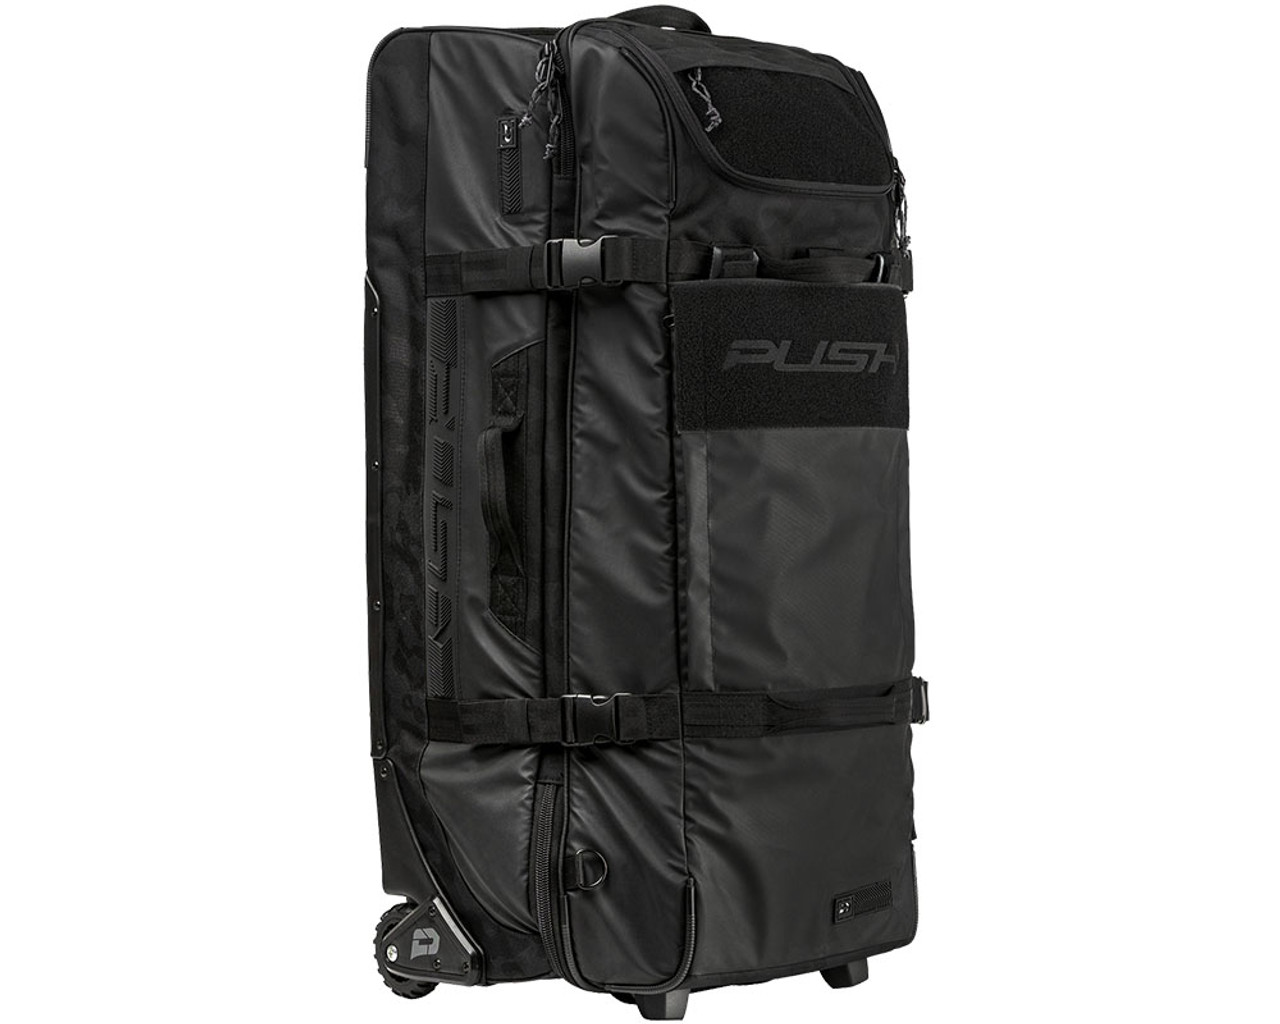 Push Division 01 Large Rolling Gear Bag - Black 